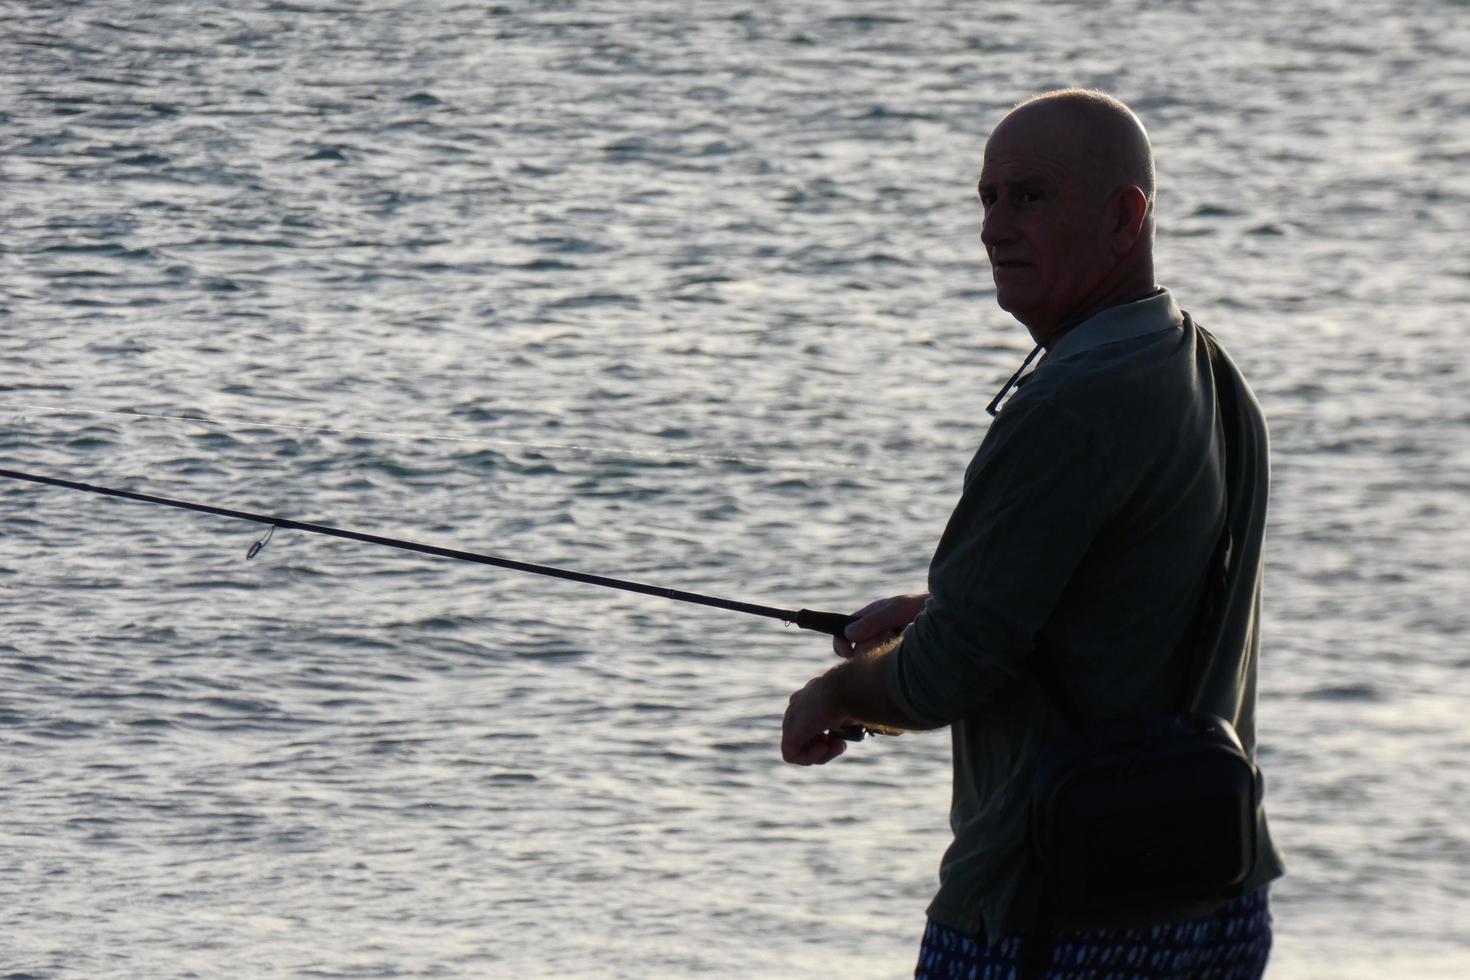 Beach shore fishing, traditional fishing as a hobby photo